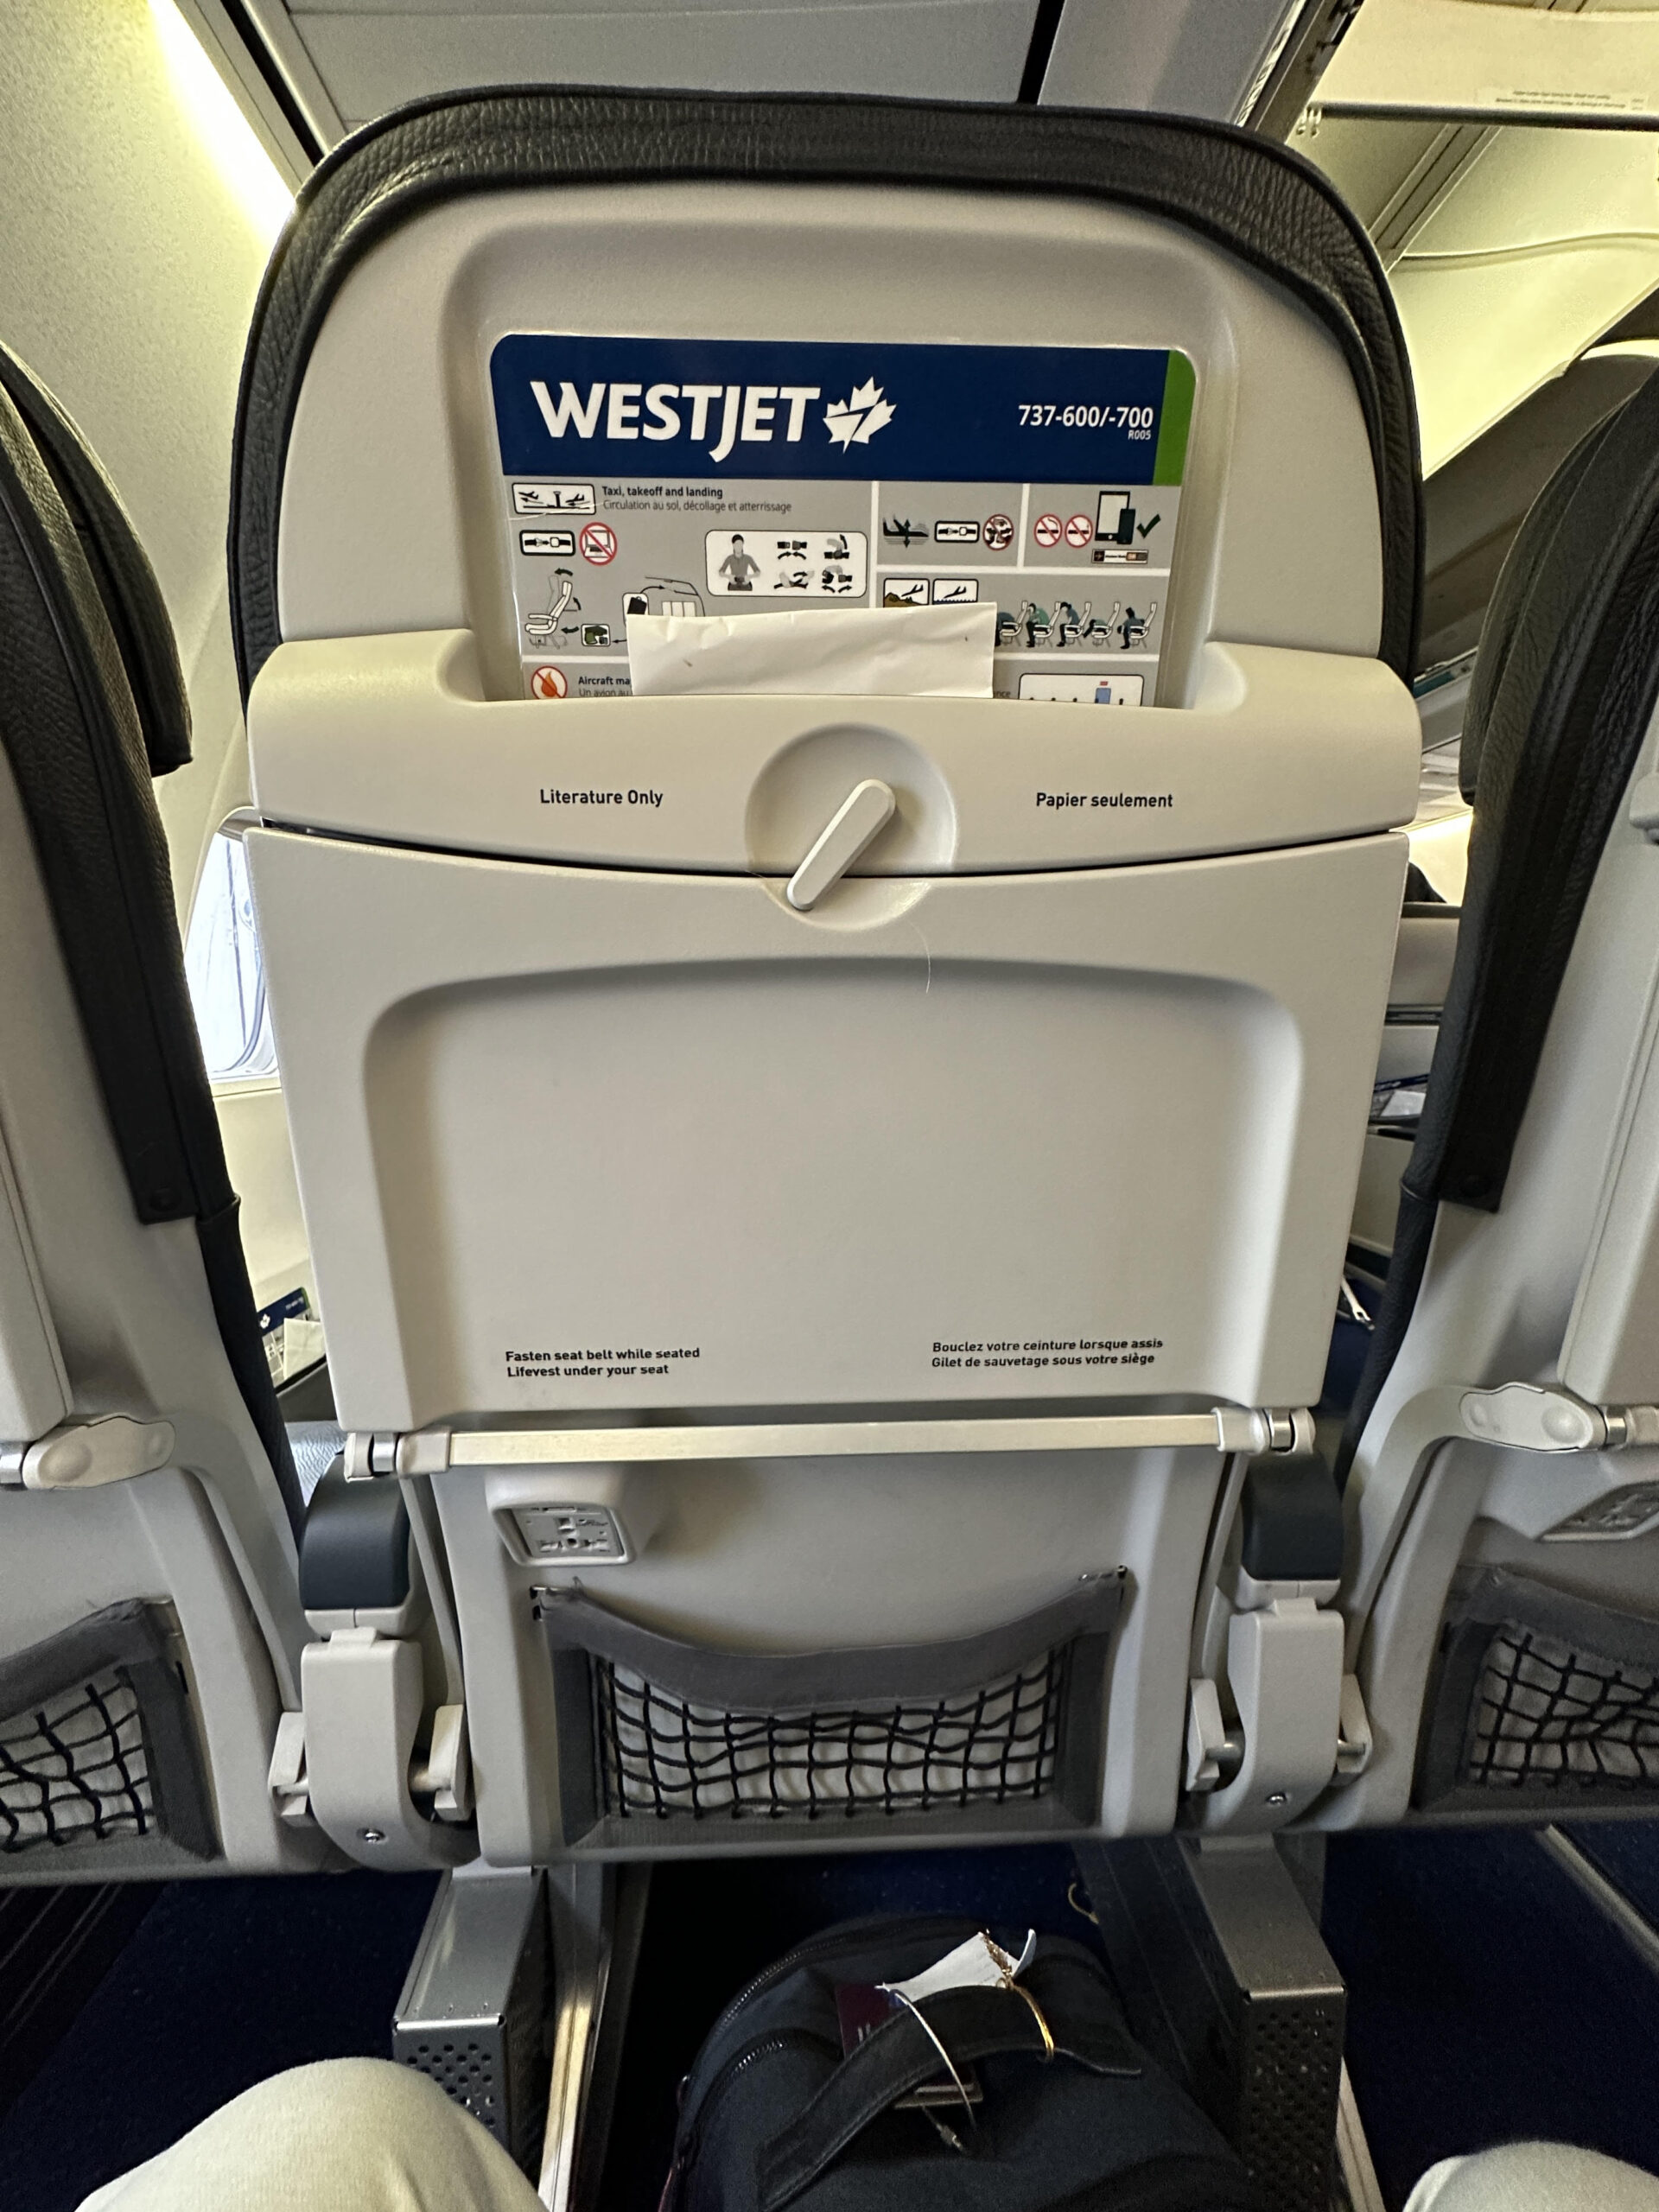 Westjet low cost carrier